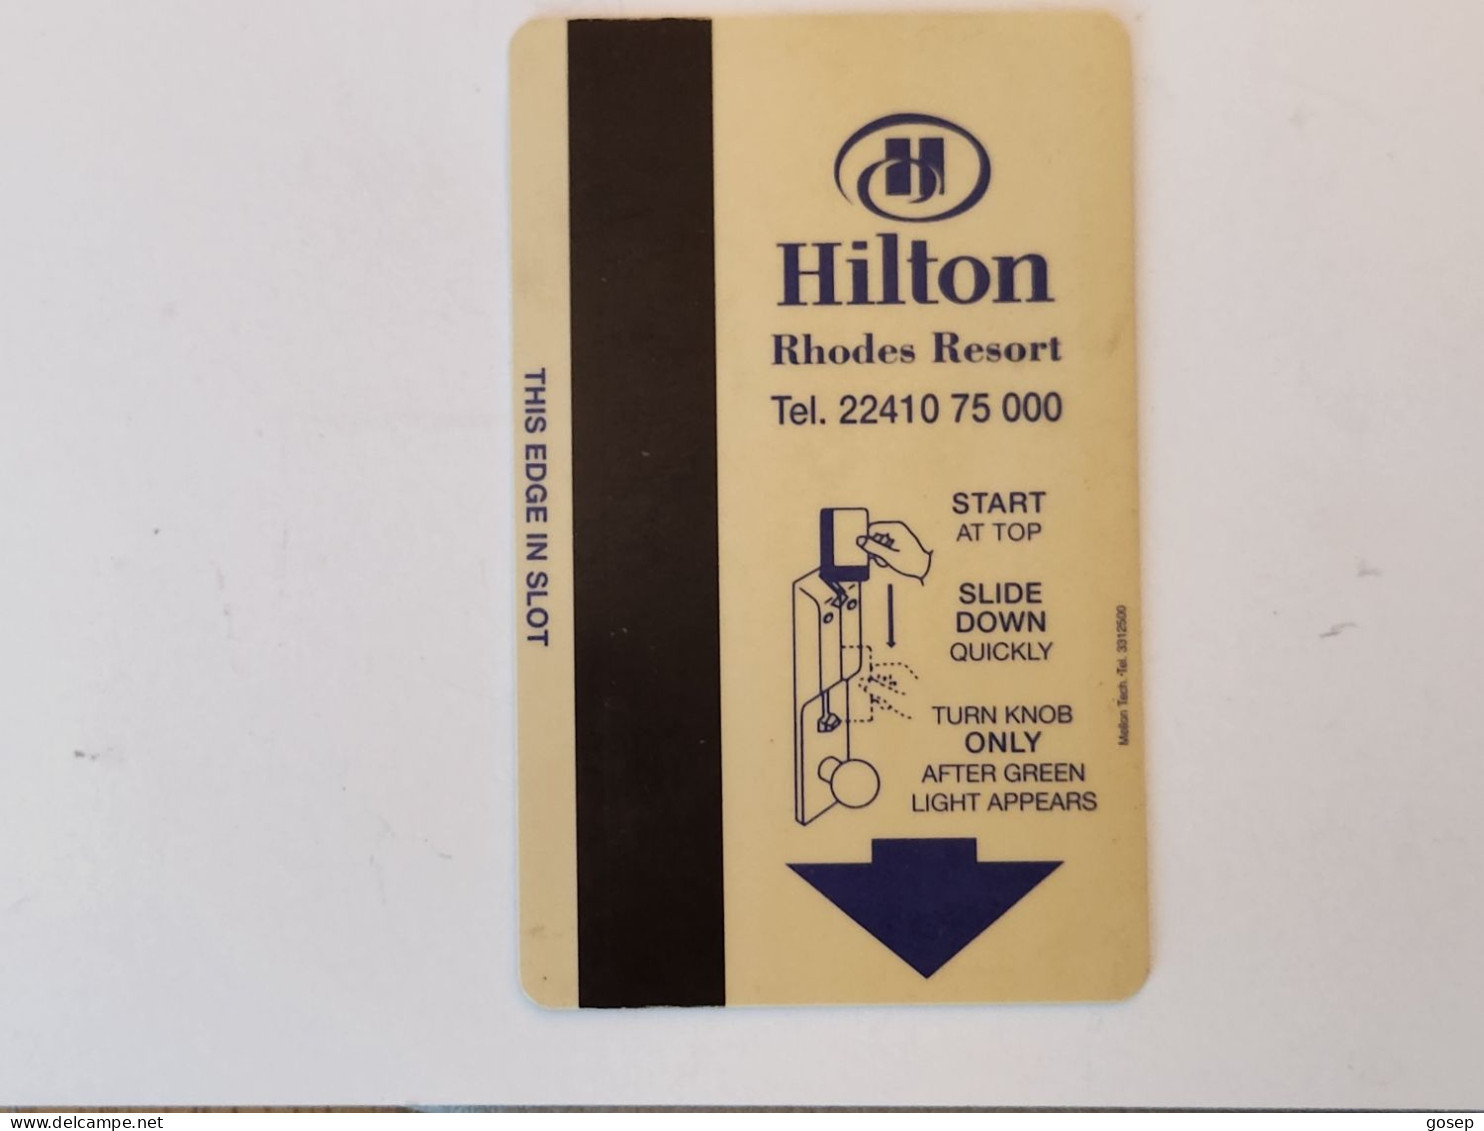 ISRAEL-HILLTON-HOTAL KEY-(1095)(?)GOOD CARD - Hotelkarten